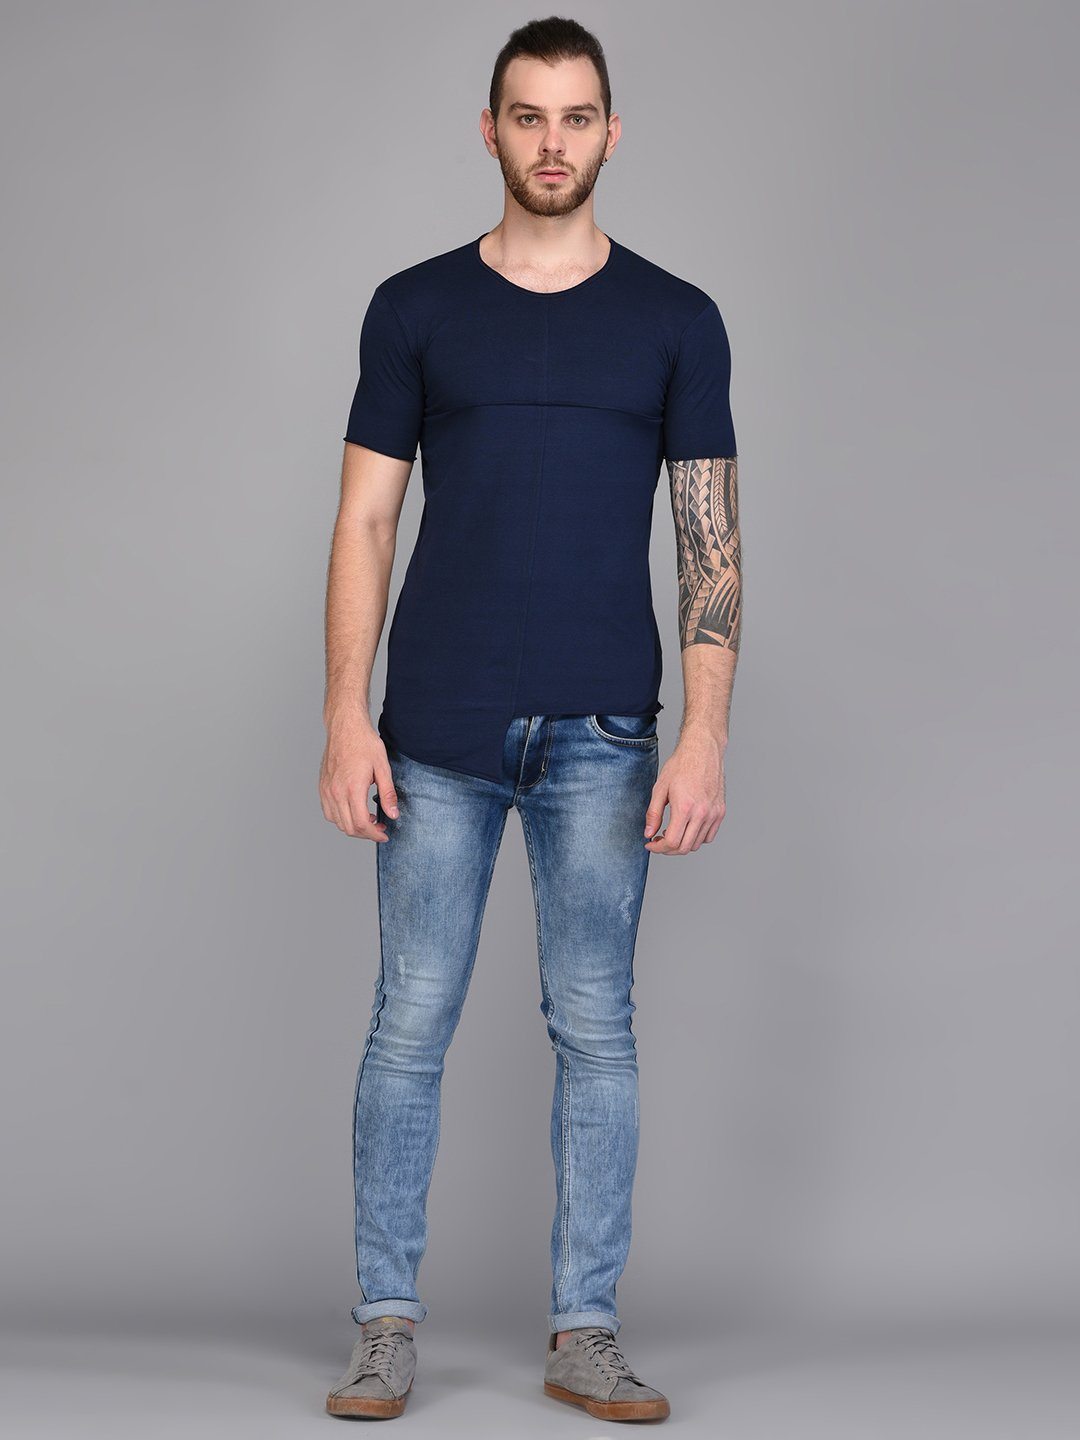 Navy Blue Paneled T-shirt with Asymmetrical Hemline